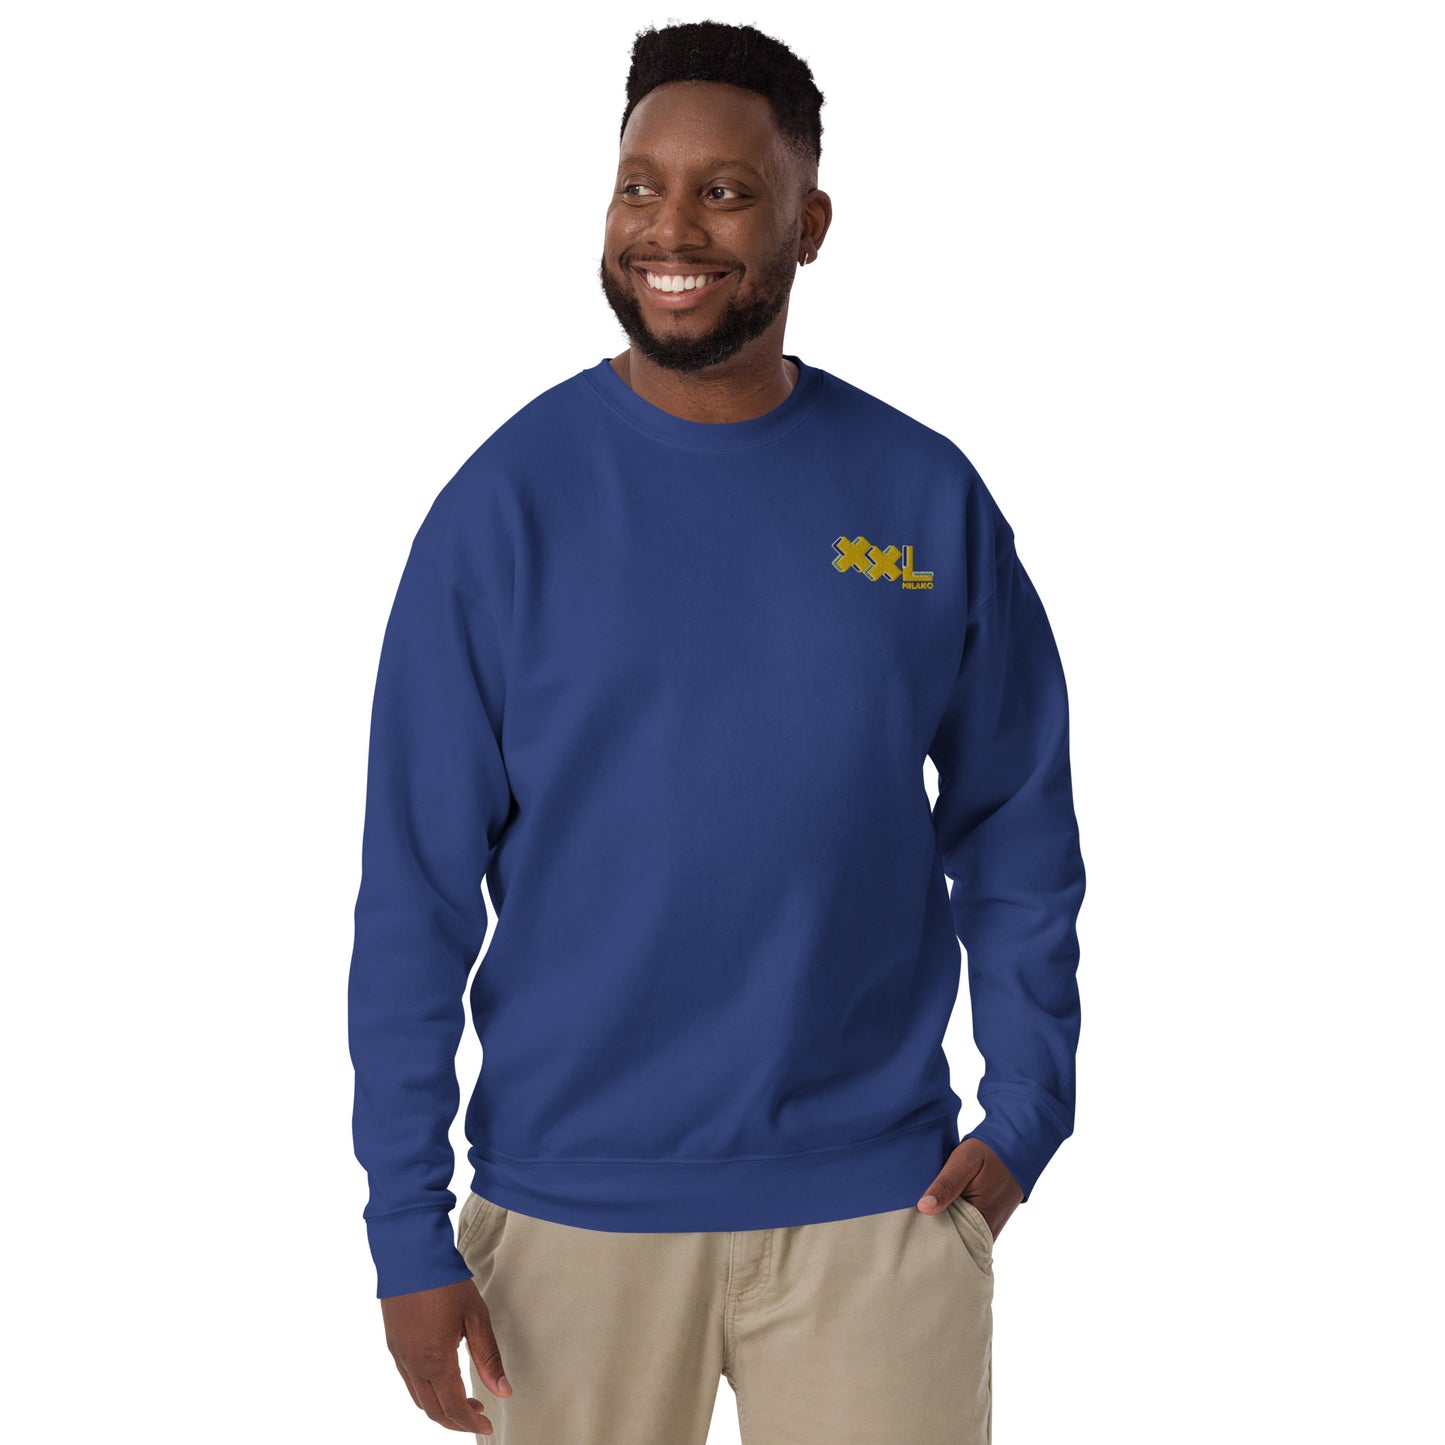 Premium unisex sweatshirt with embroidery